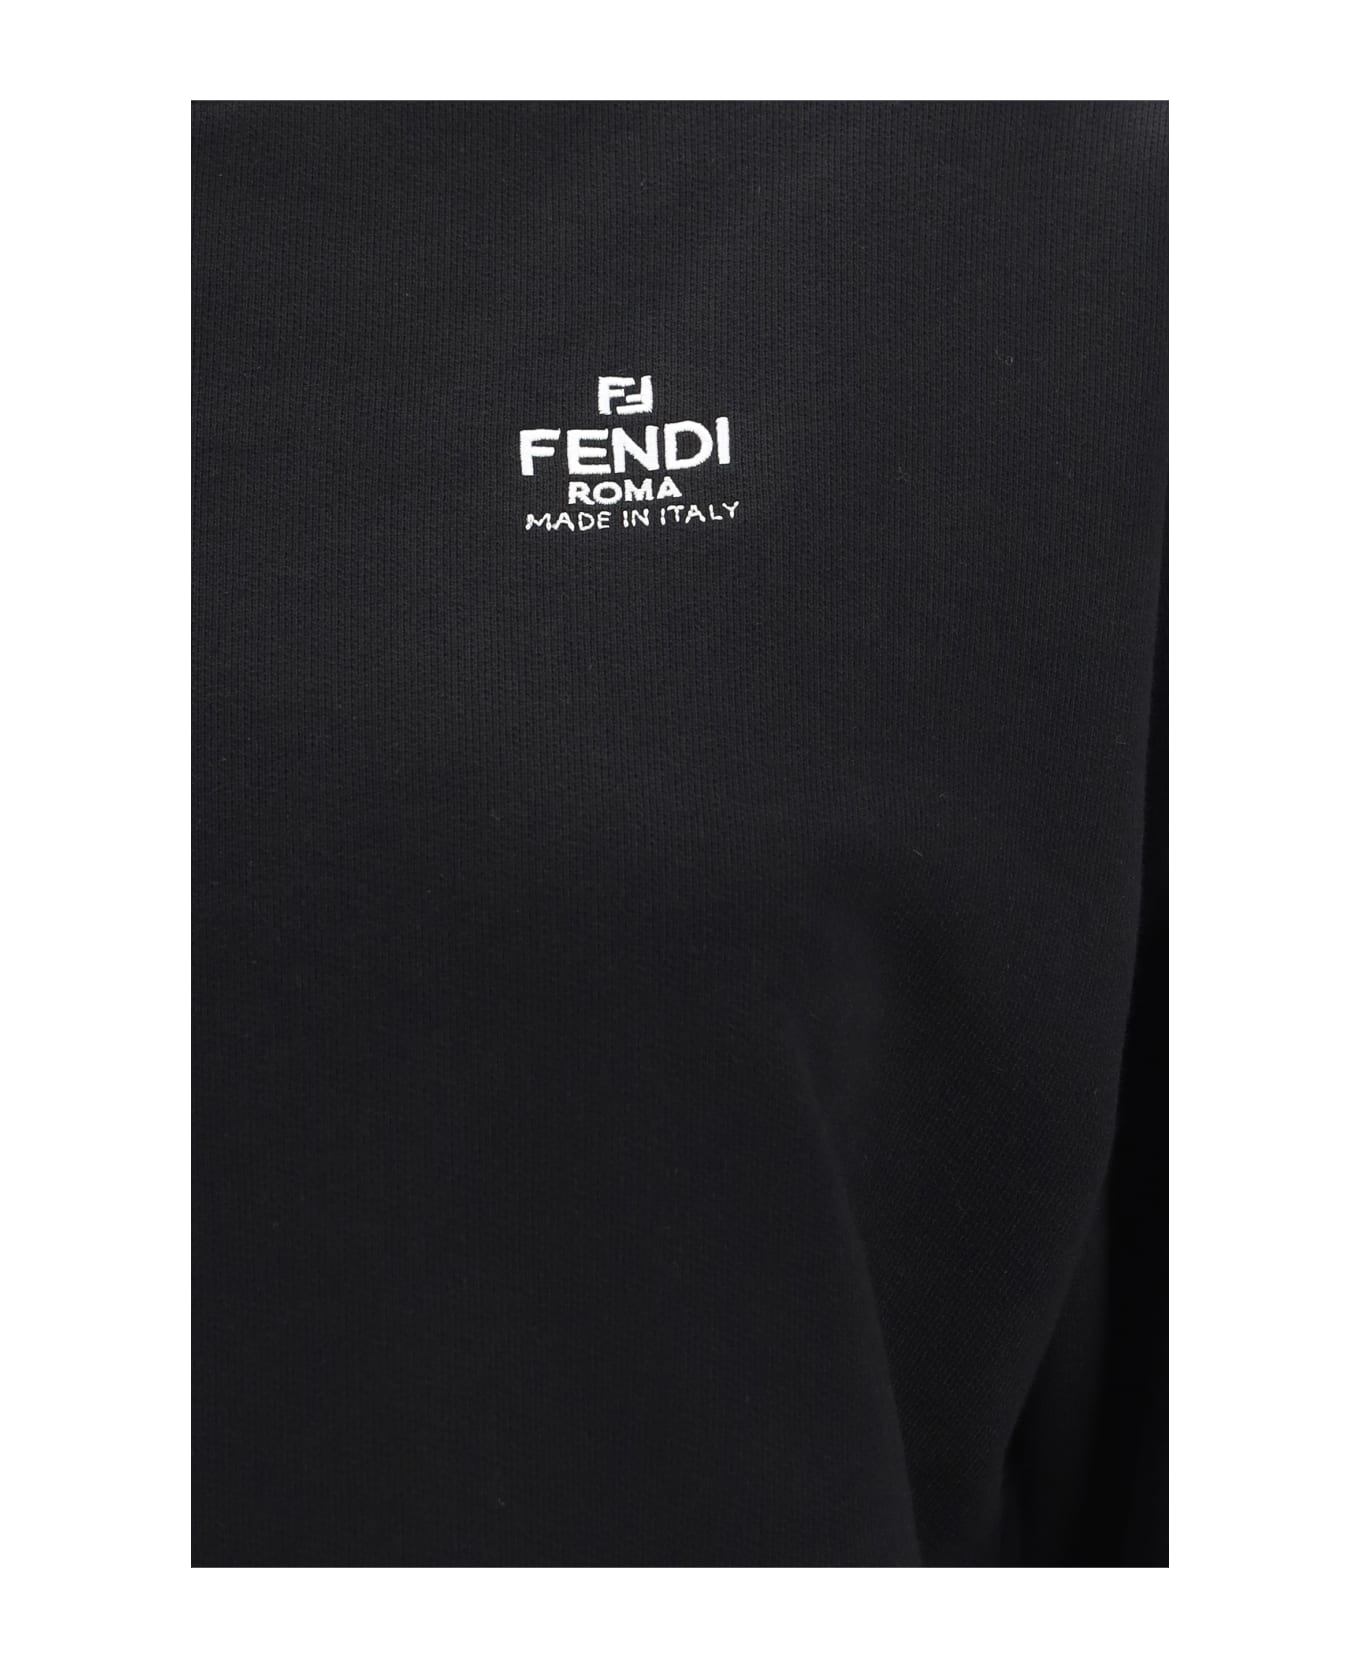 Fendi Roma Sweatshirt - Gme Black フリース